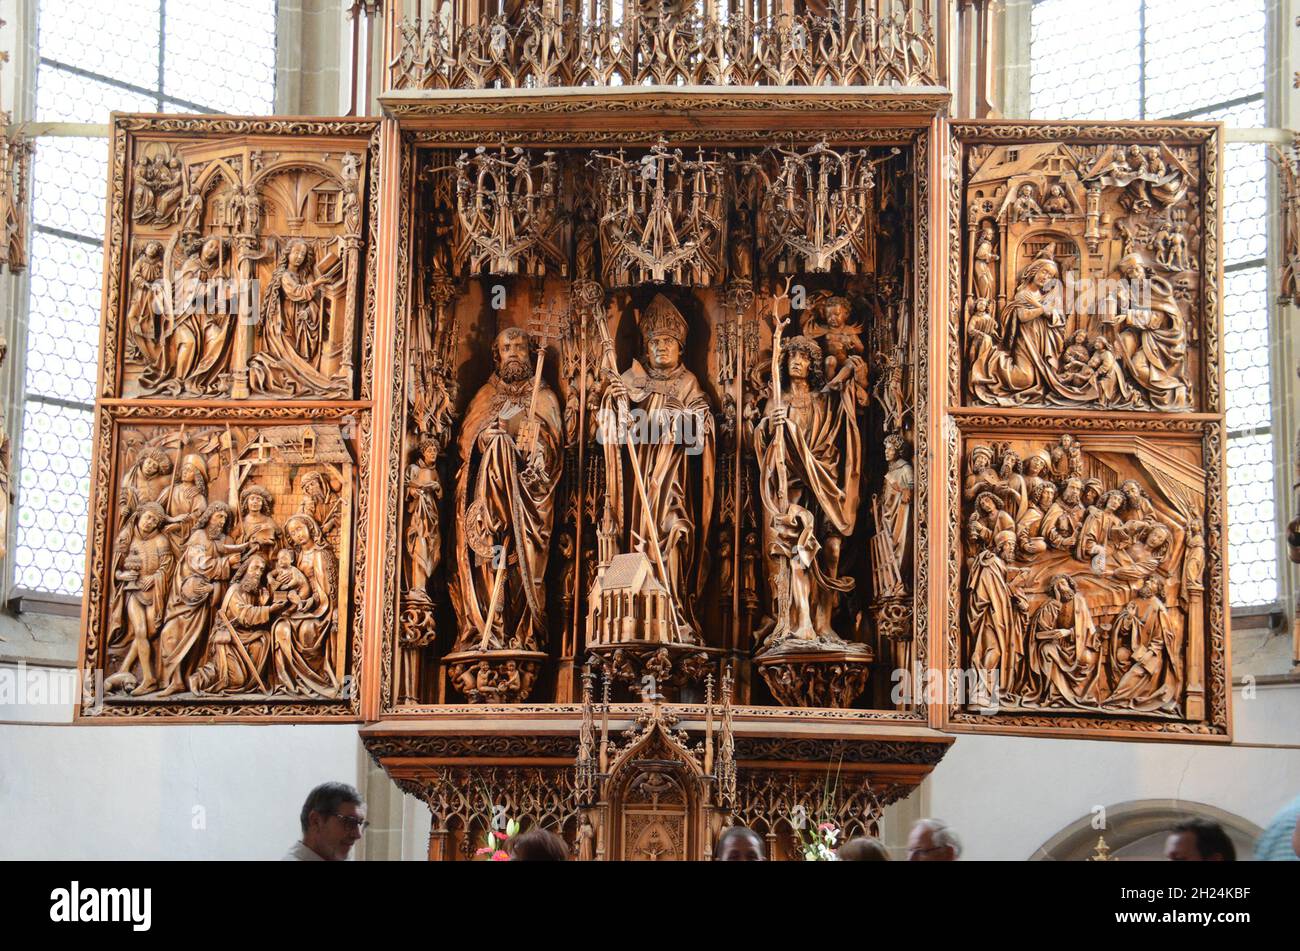 Der berühmte Flügelaltar in Kefermarkt, Österreich, Europa - The famous winged altar in Kefermarkt, Austria, Europe Stock Photo